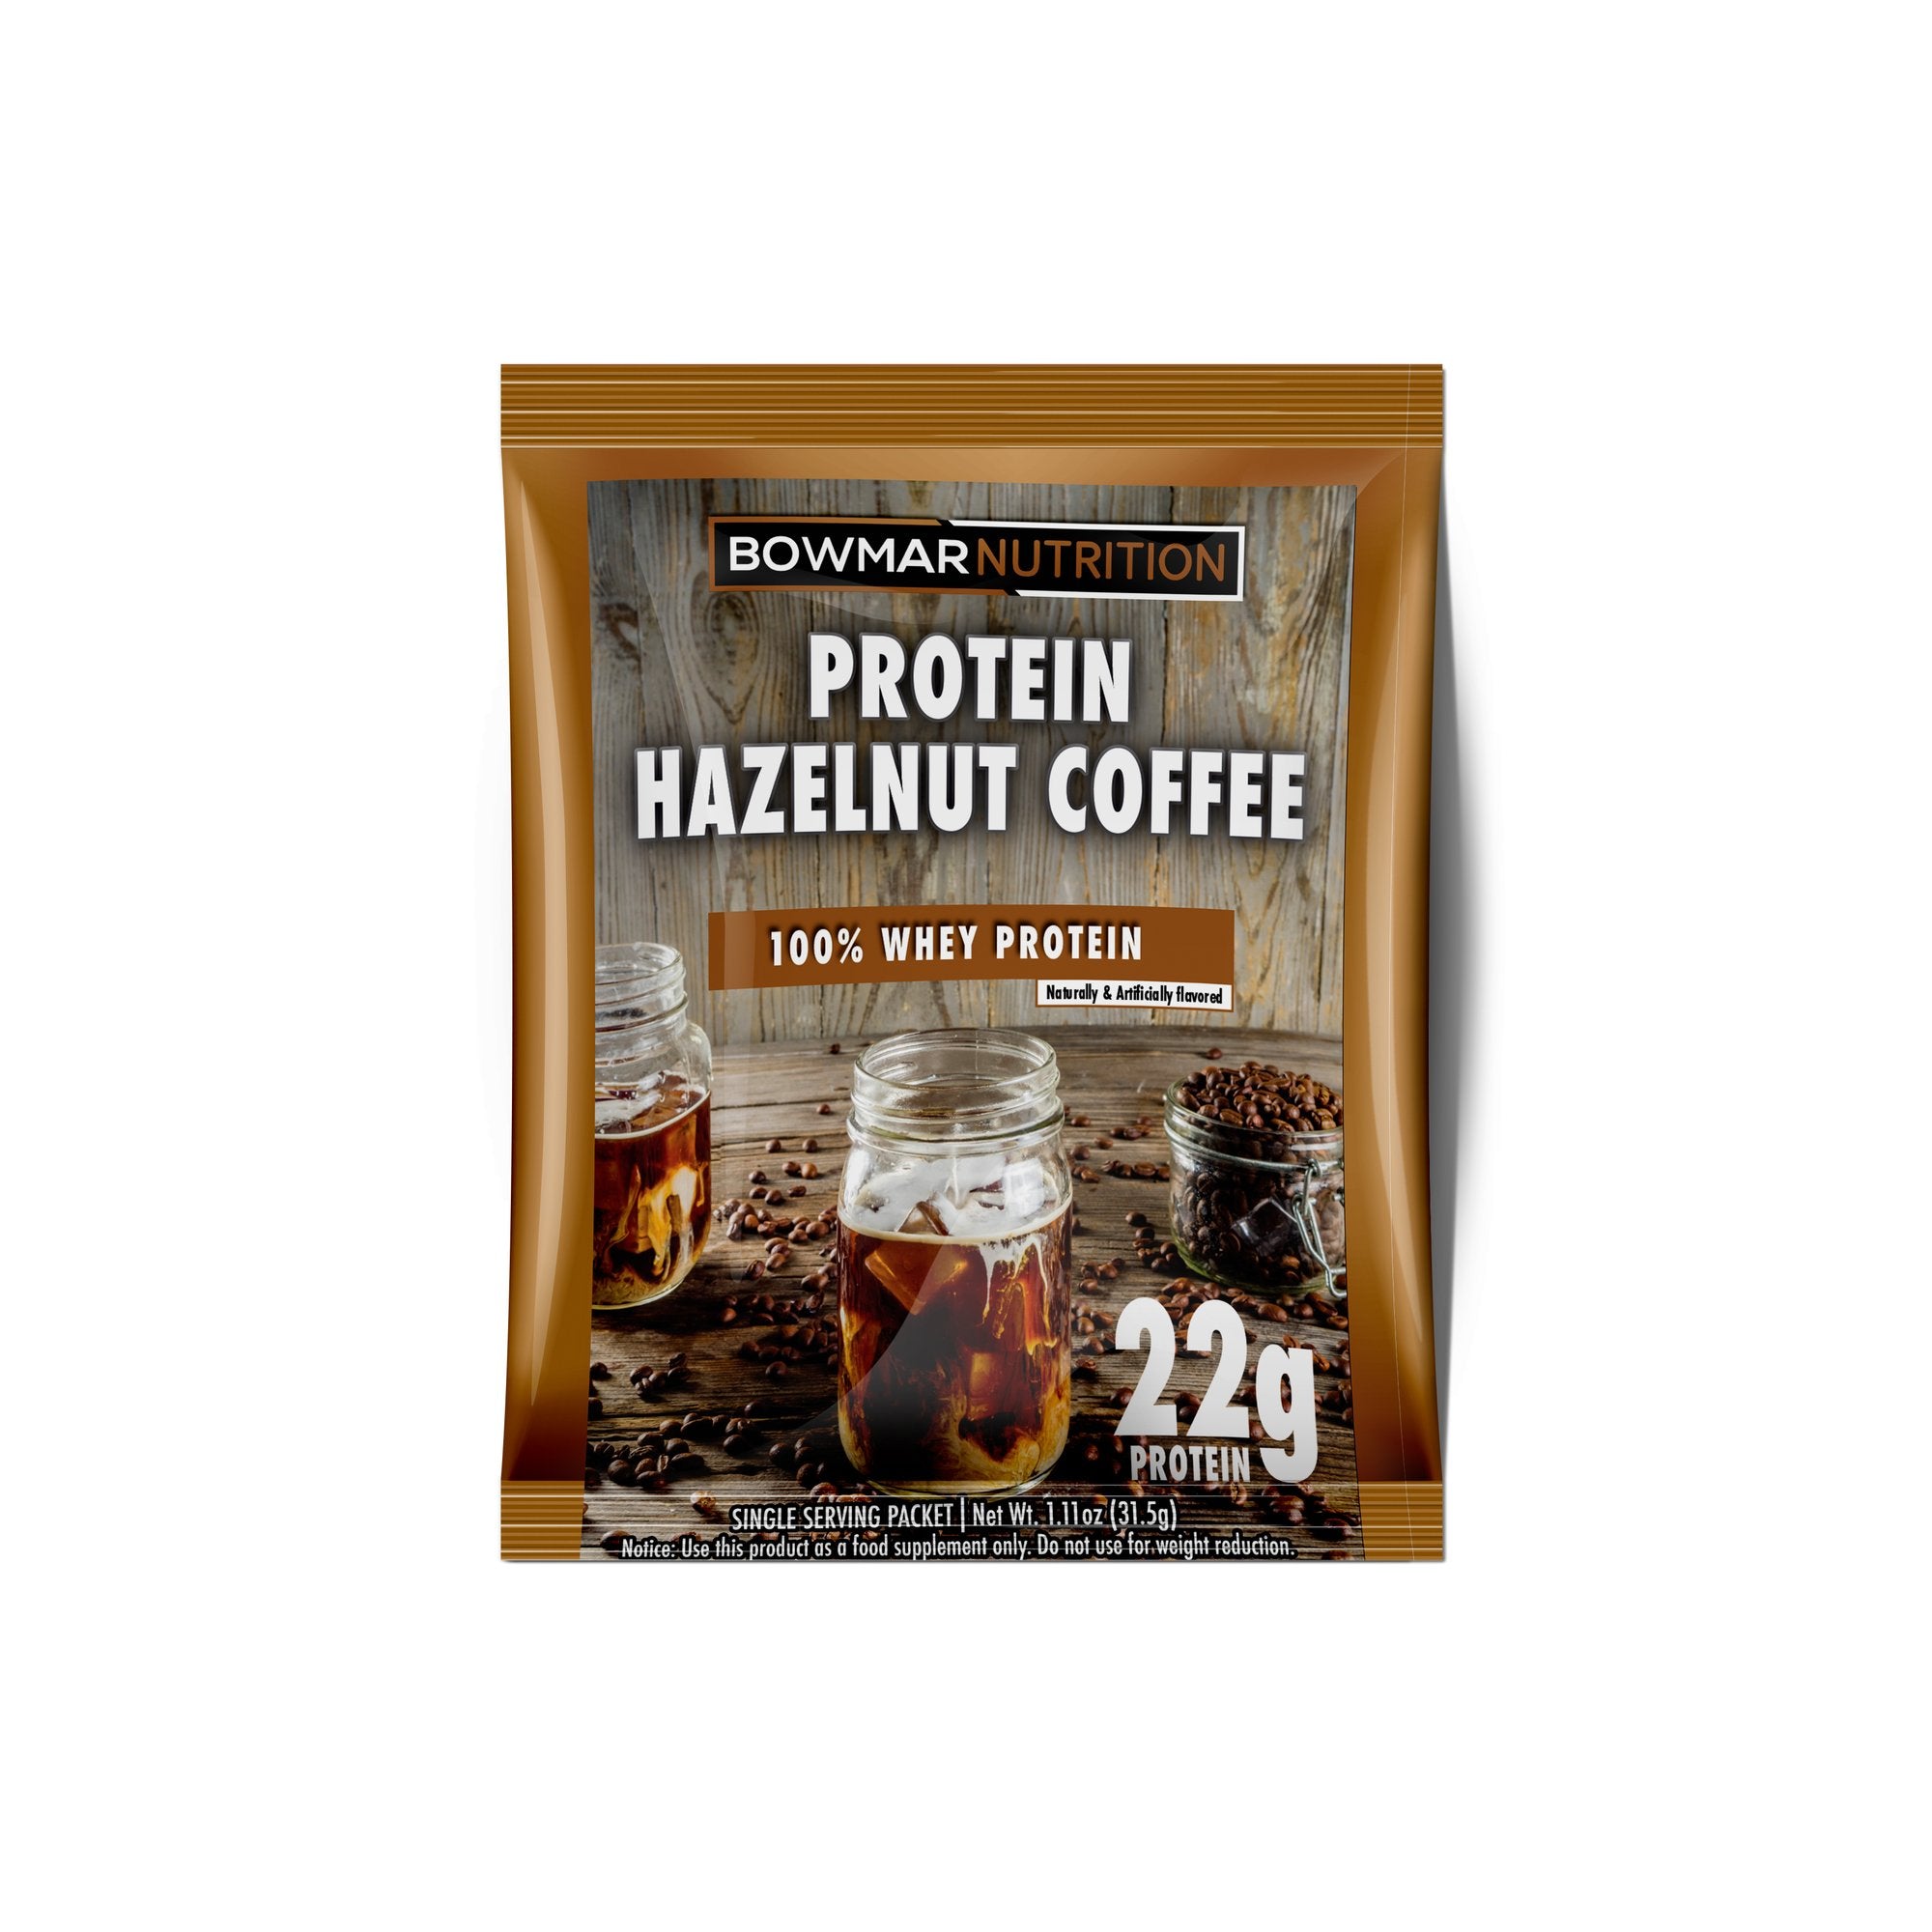 Bowmar Whey Protein Powder Sample (1 serving) Protein Snacks Hazelnut Coffee bowmar